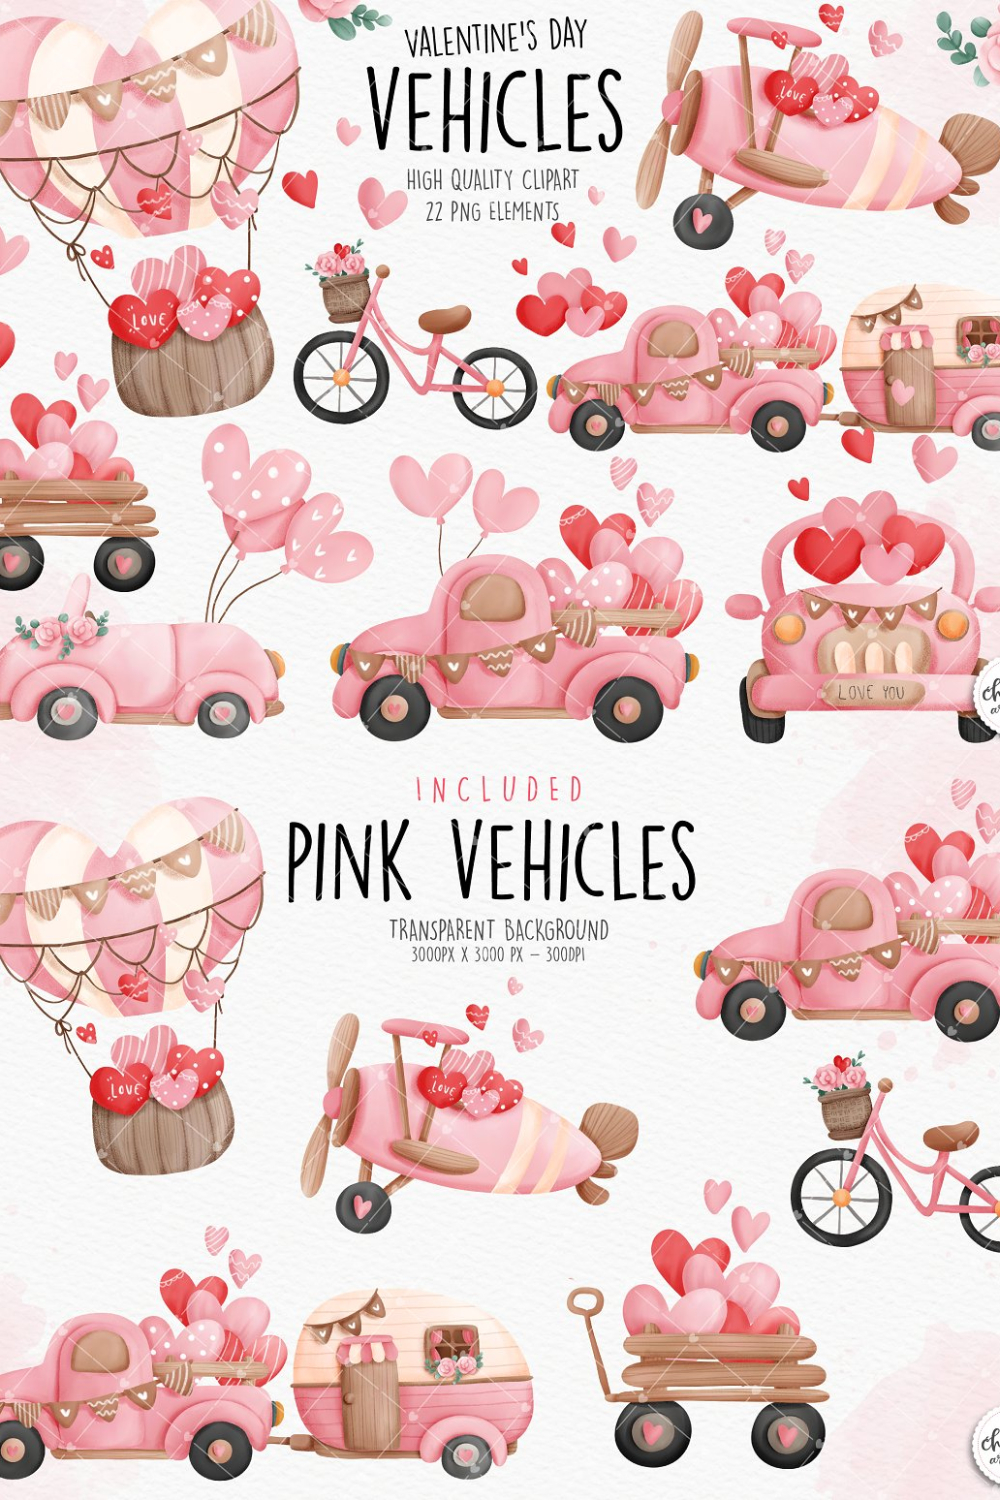 Valentine's Vehicles Clipart - Pinterest.